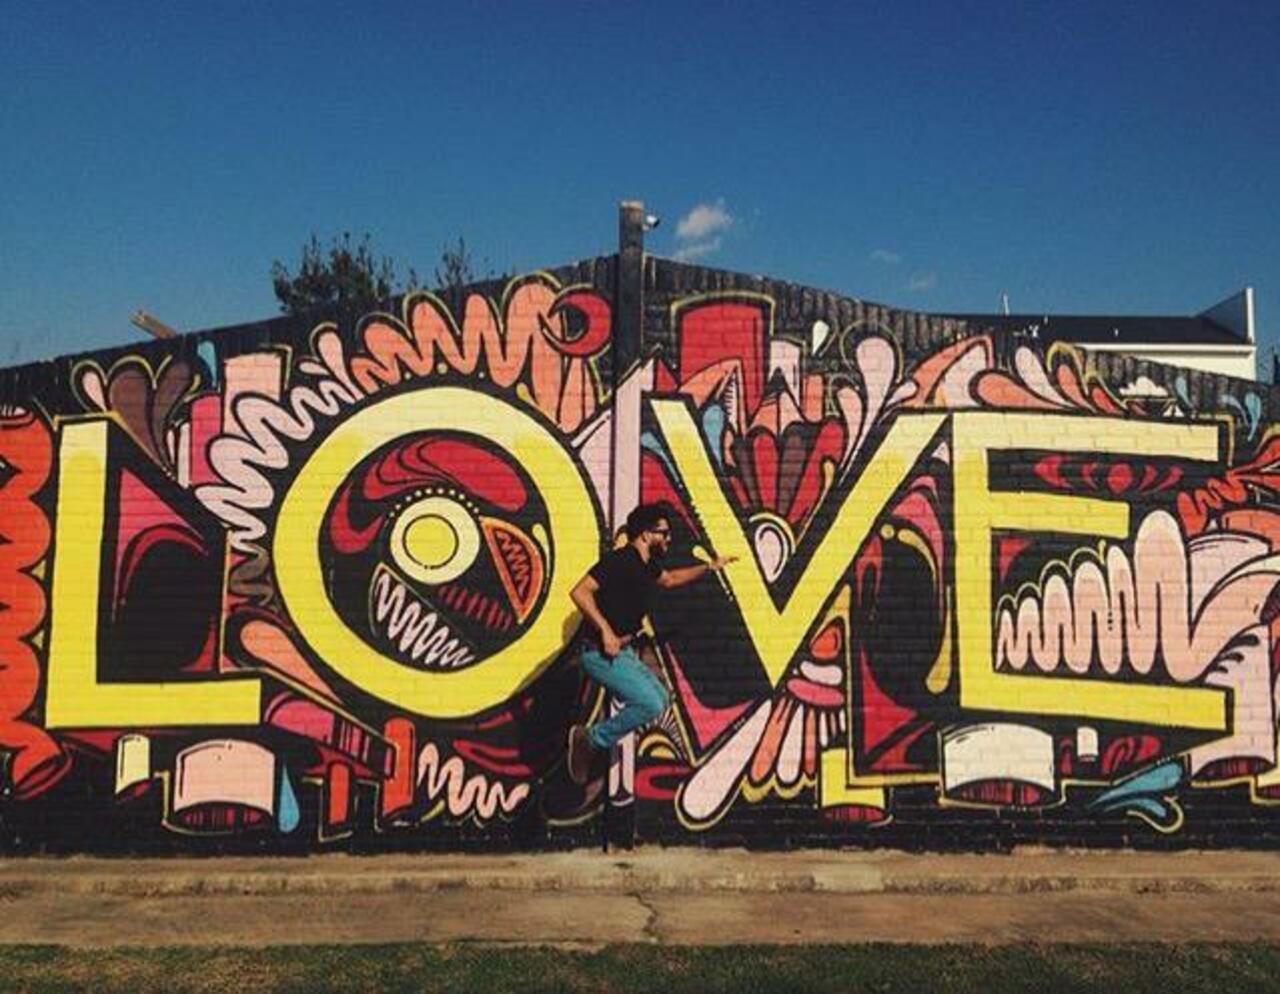 Love ❤️
Street Art by WileyArt

#art #graffiti #mural #streetart http://t.co/QitwMgCZeE